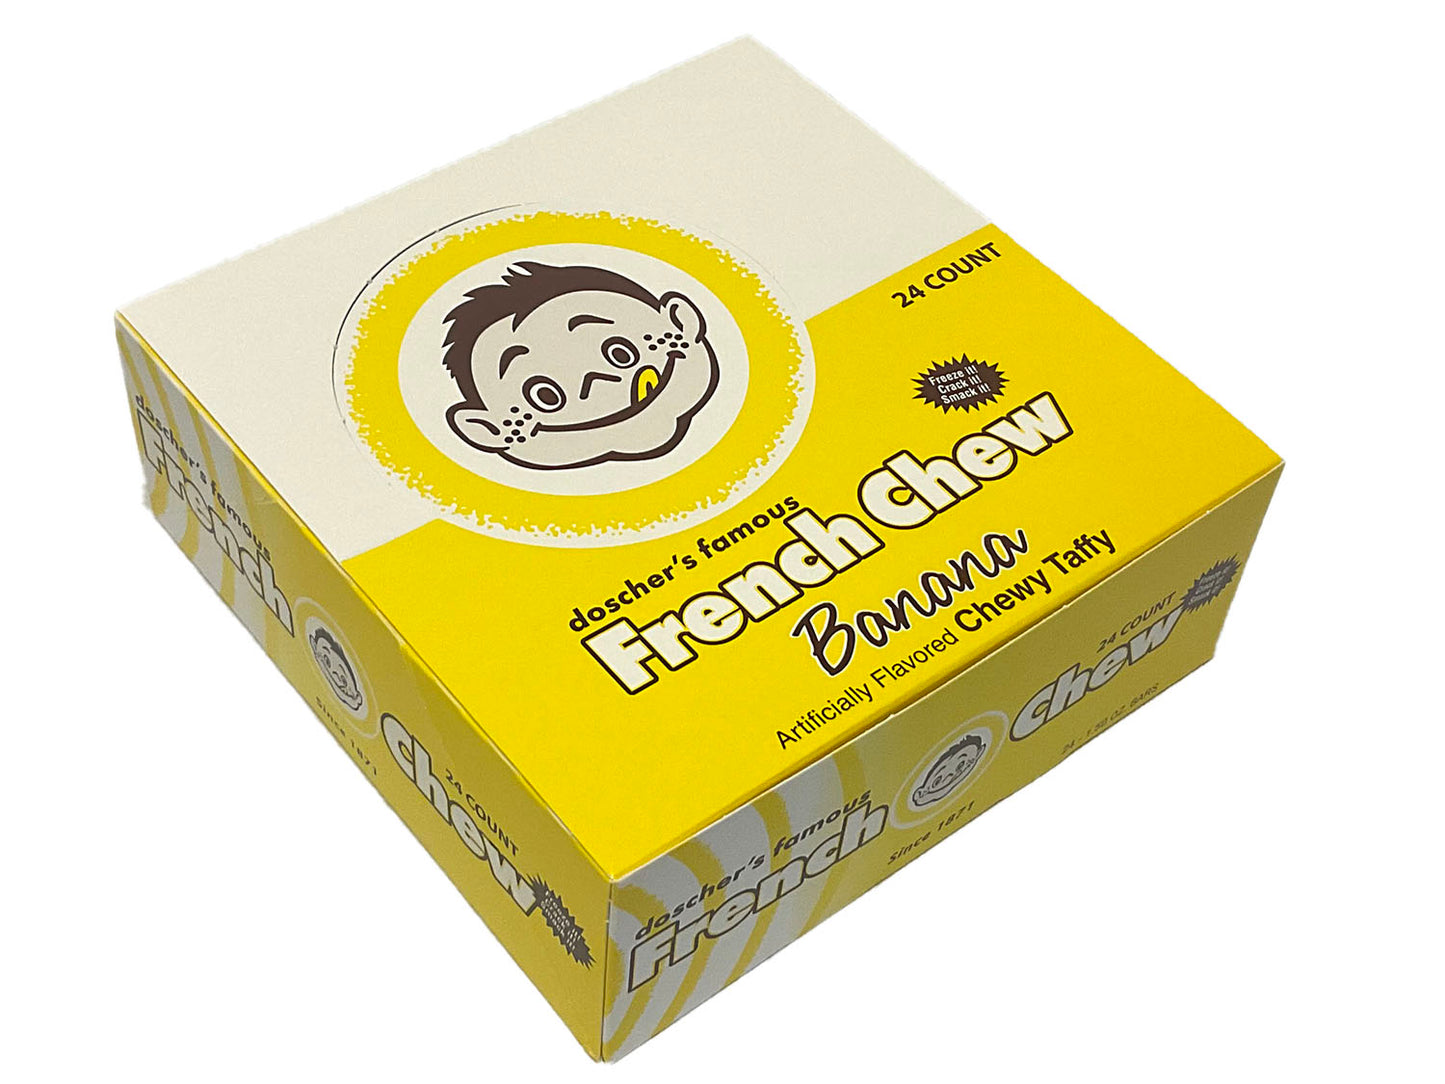 French Chew Taffy - 1.62 oz bar - banana - box of 24